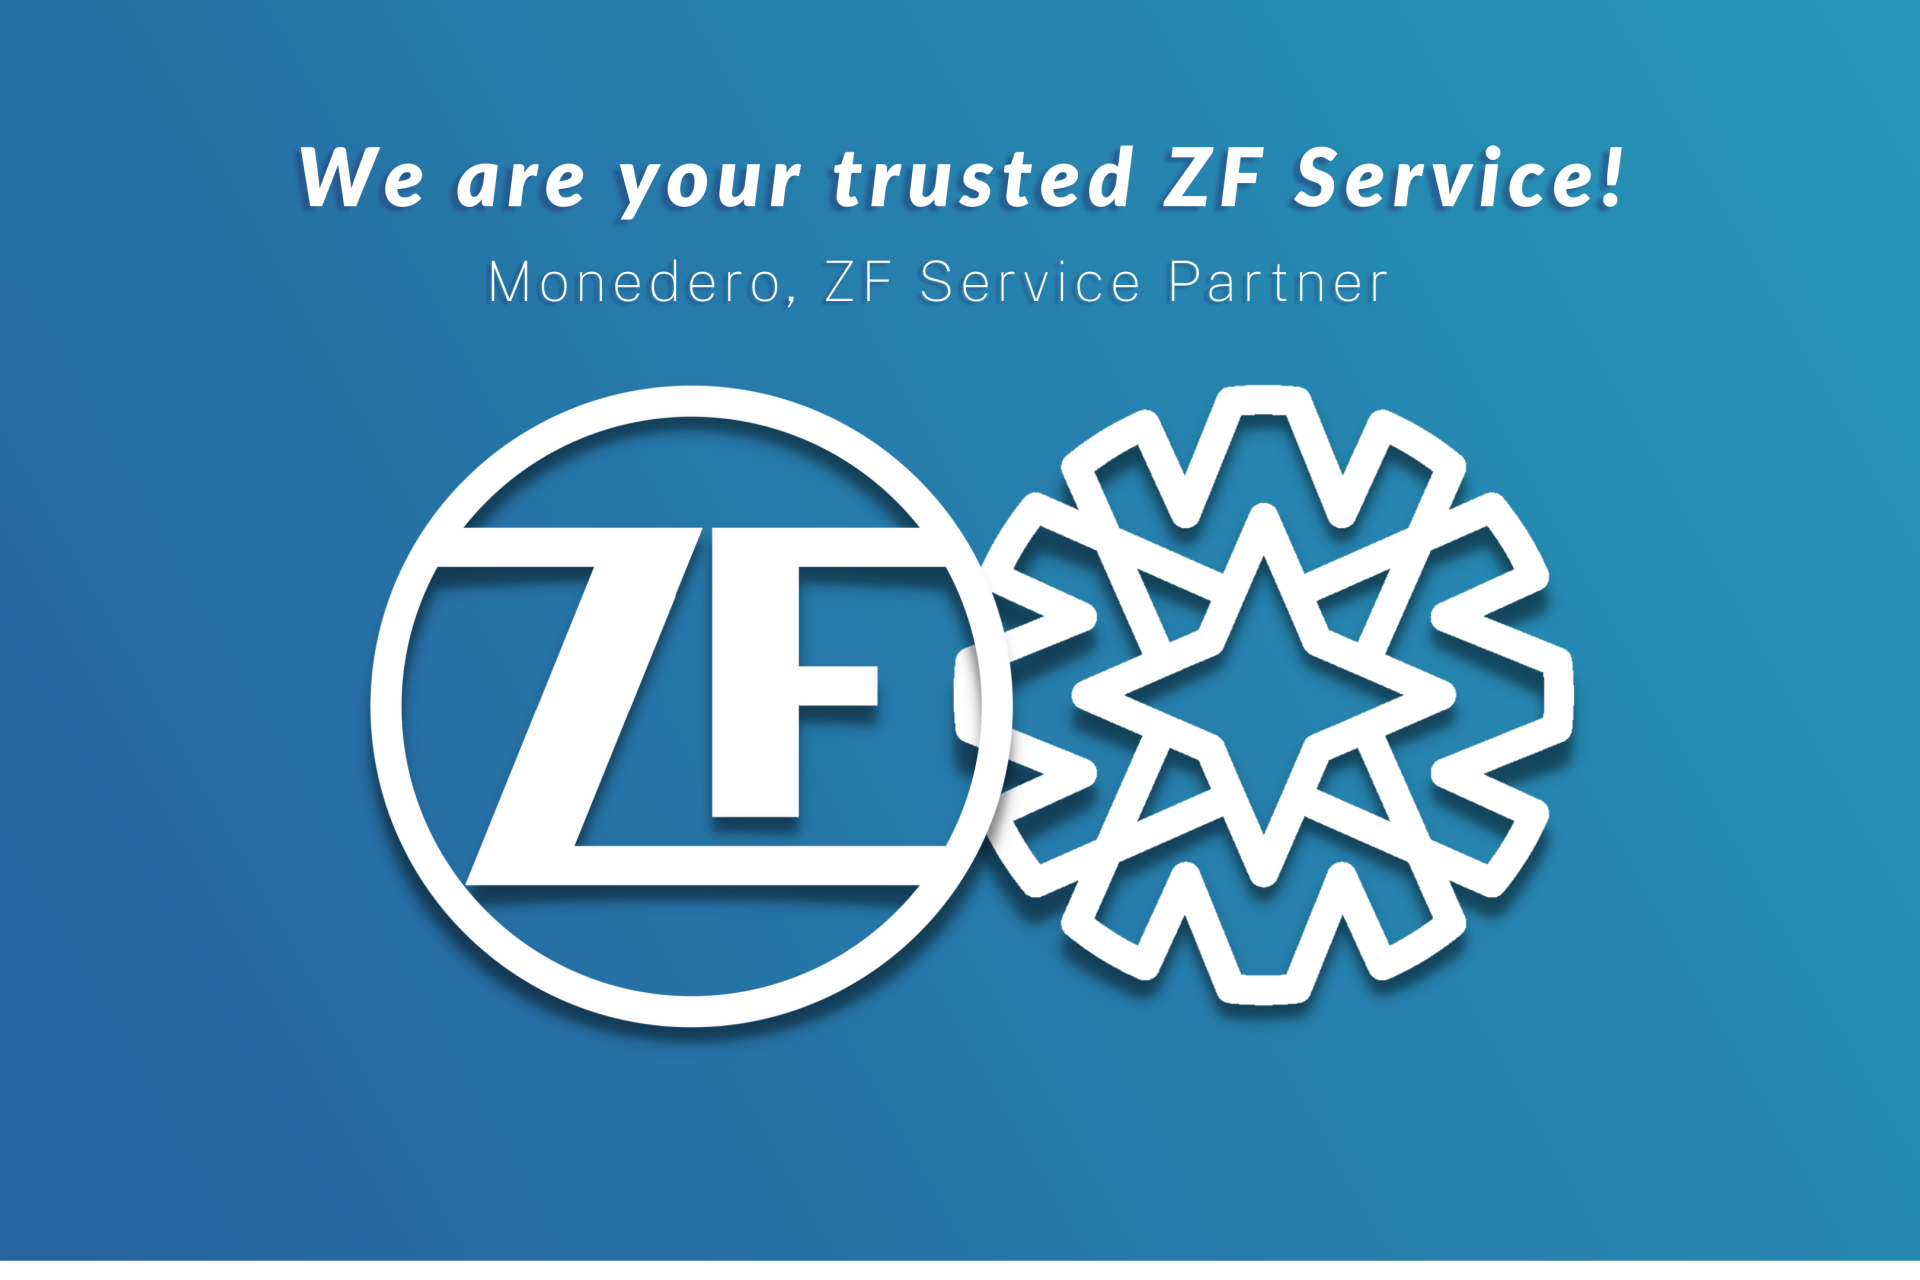 Monedero, ZF Service Partner